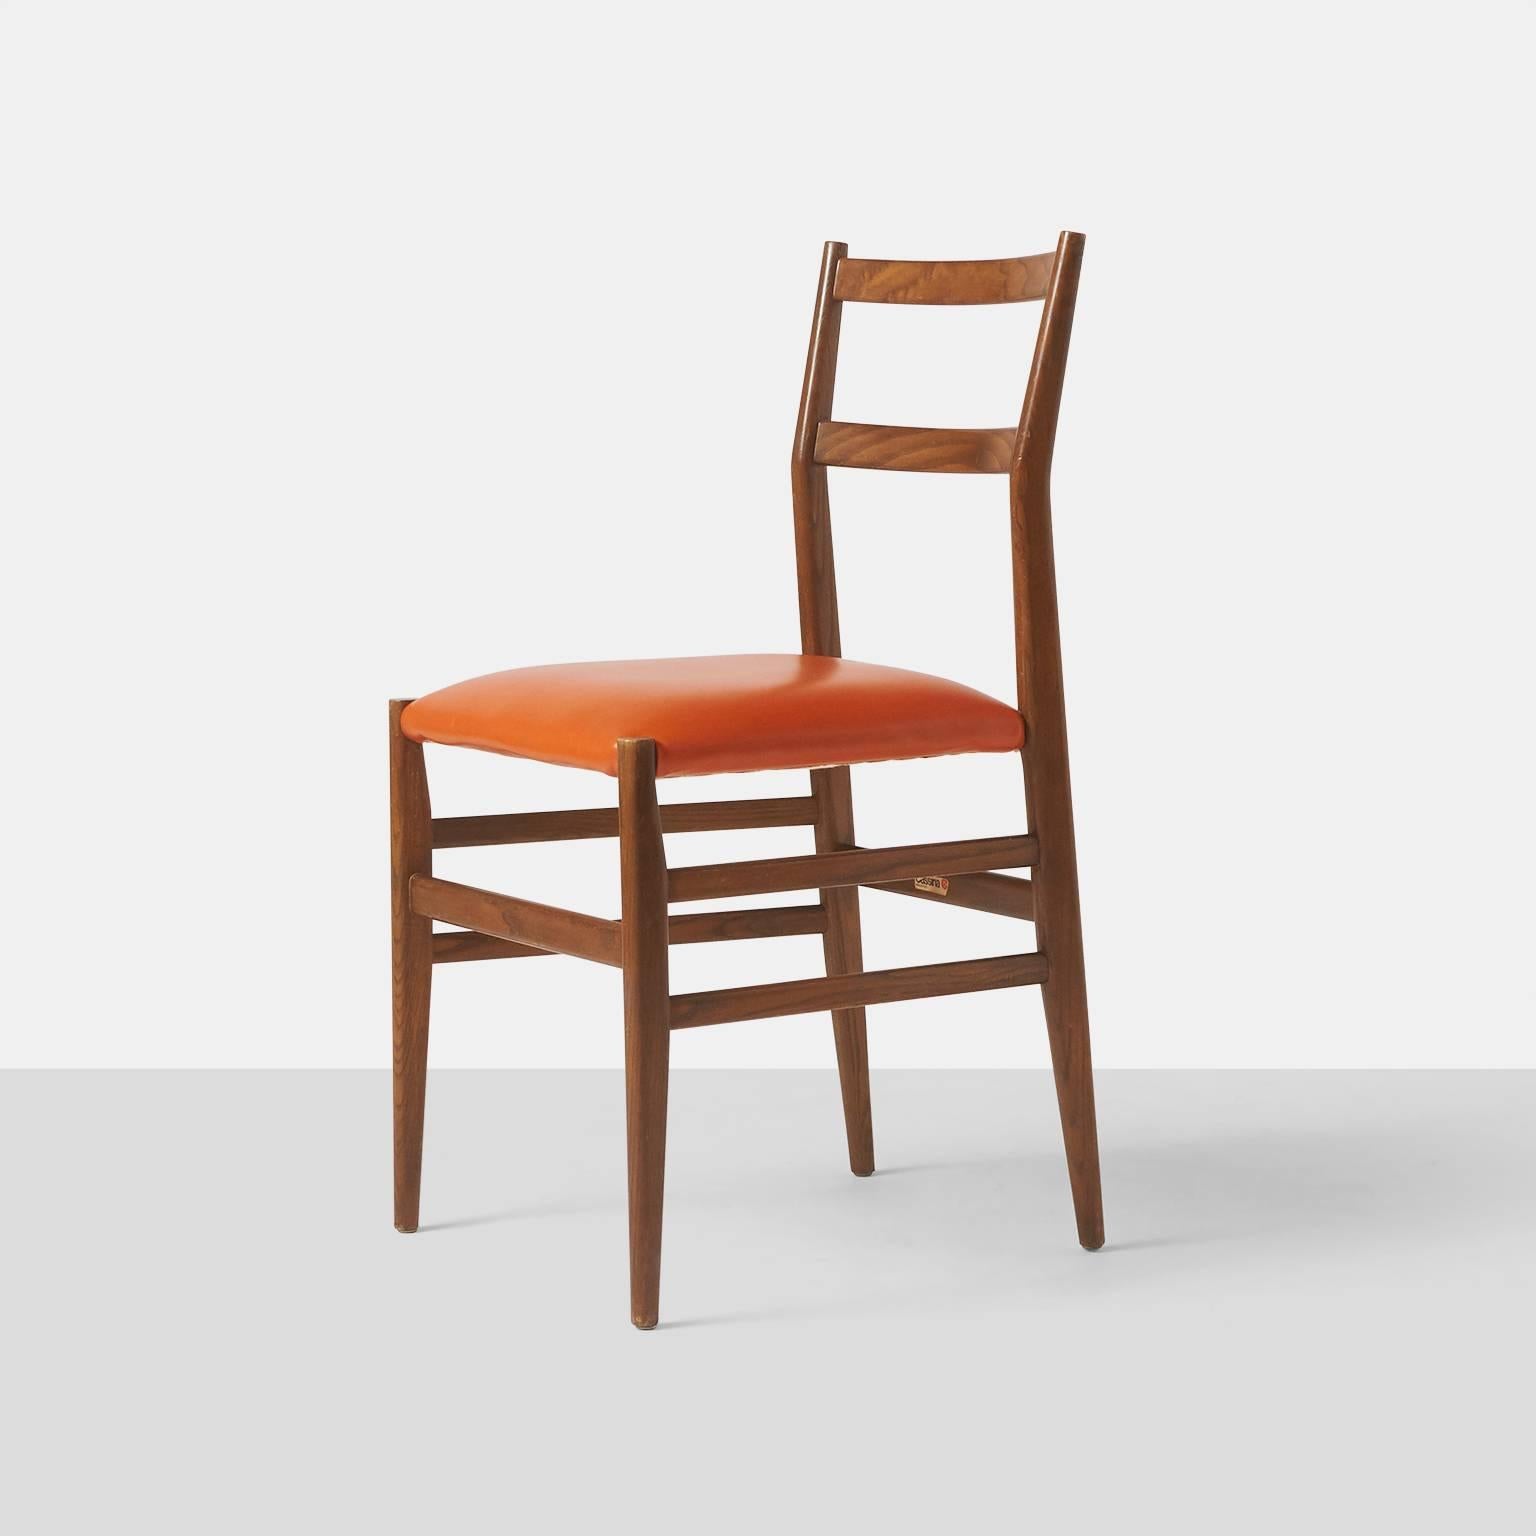 Mid-Century Modern Leggera Chairs by Gio Ponti for Cassina